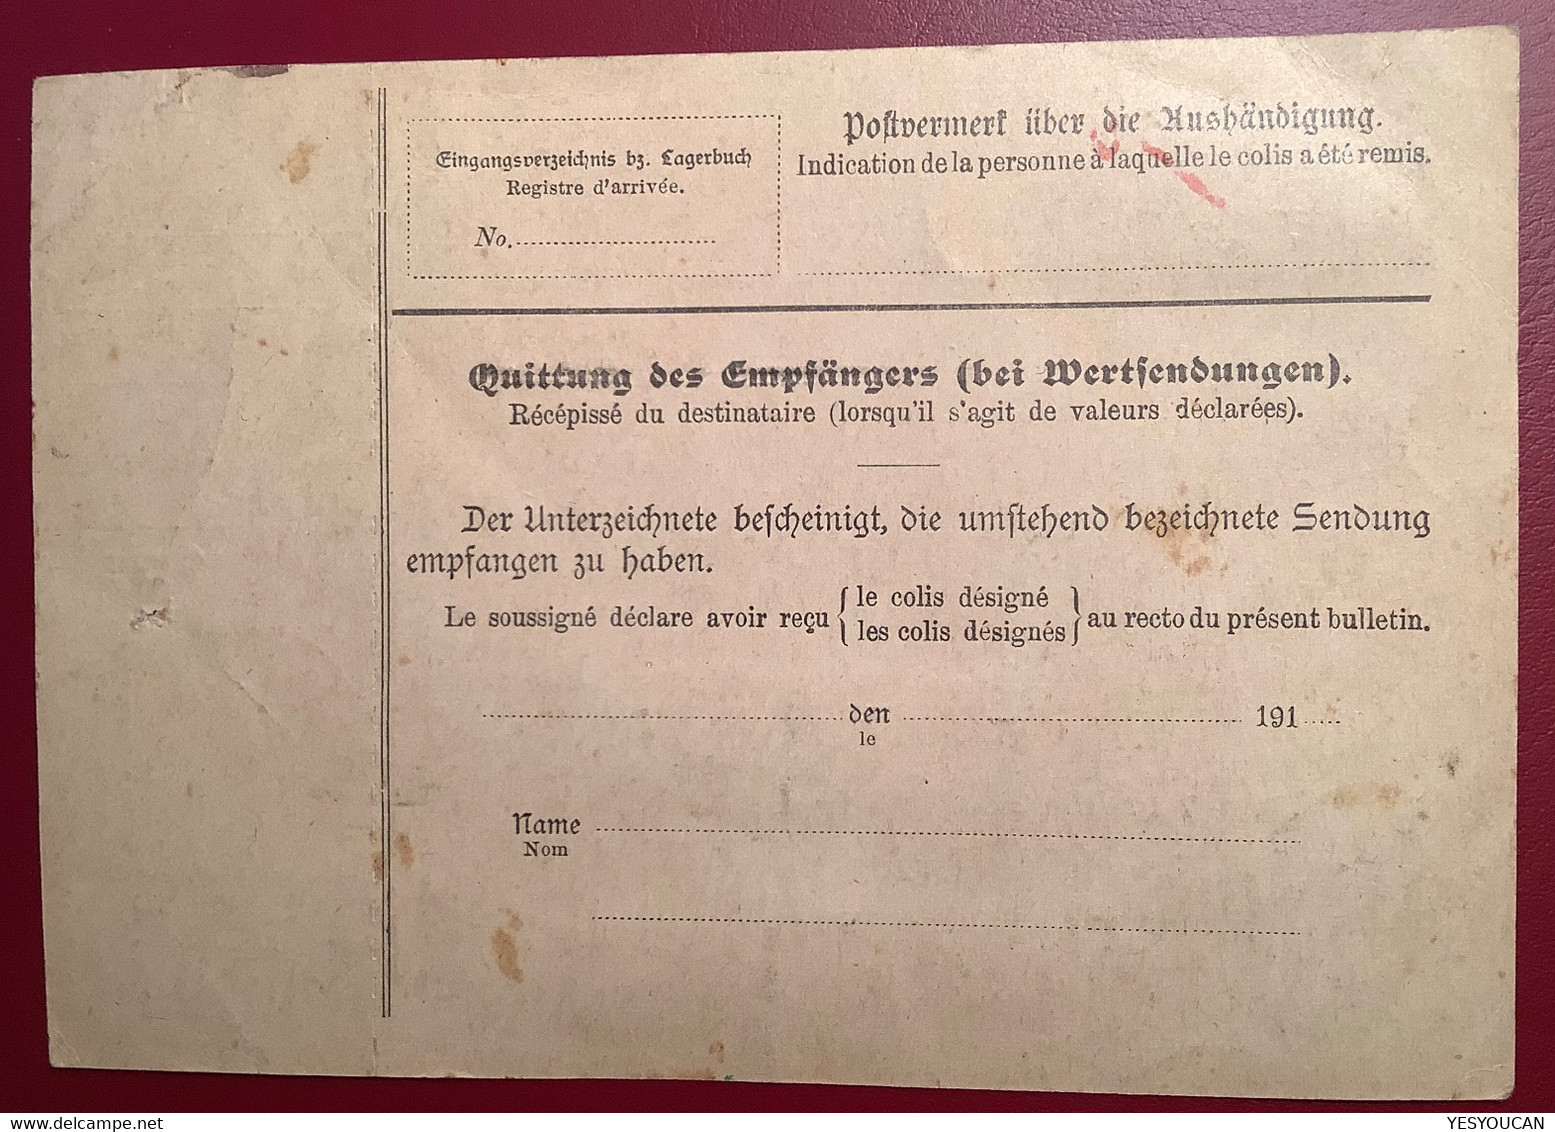 PERFIN W.B Farbenfabrik Wilhelm Brauns Quedlinburg Germania 1913Paketkarte>Droguerie Nyon (chemie Chemical  Peinture - Storia Postale